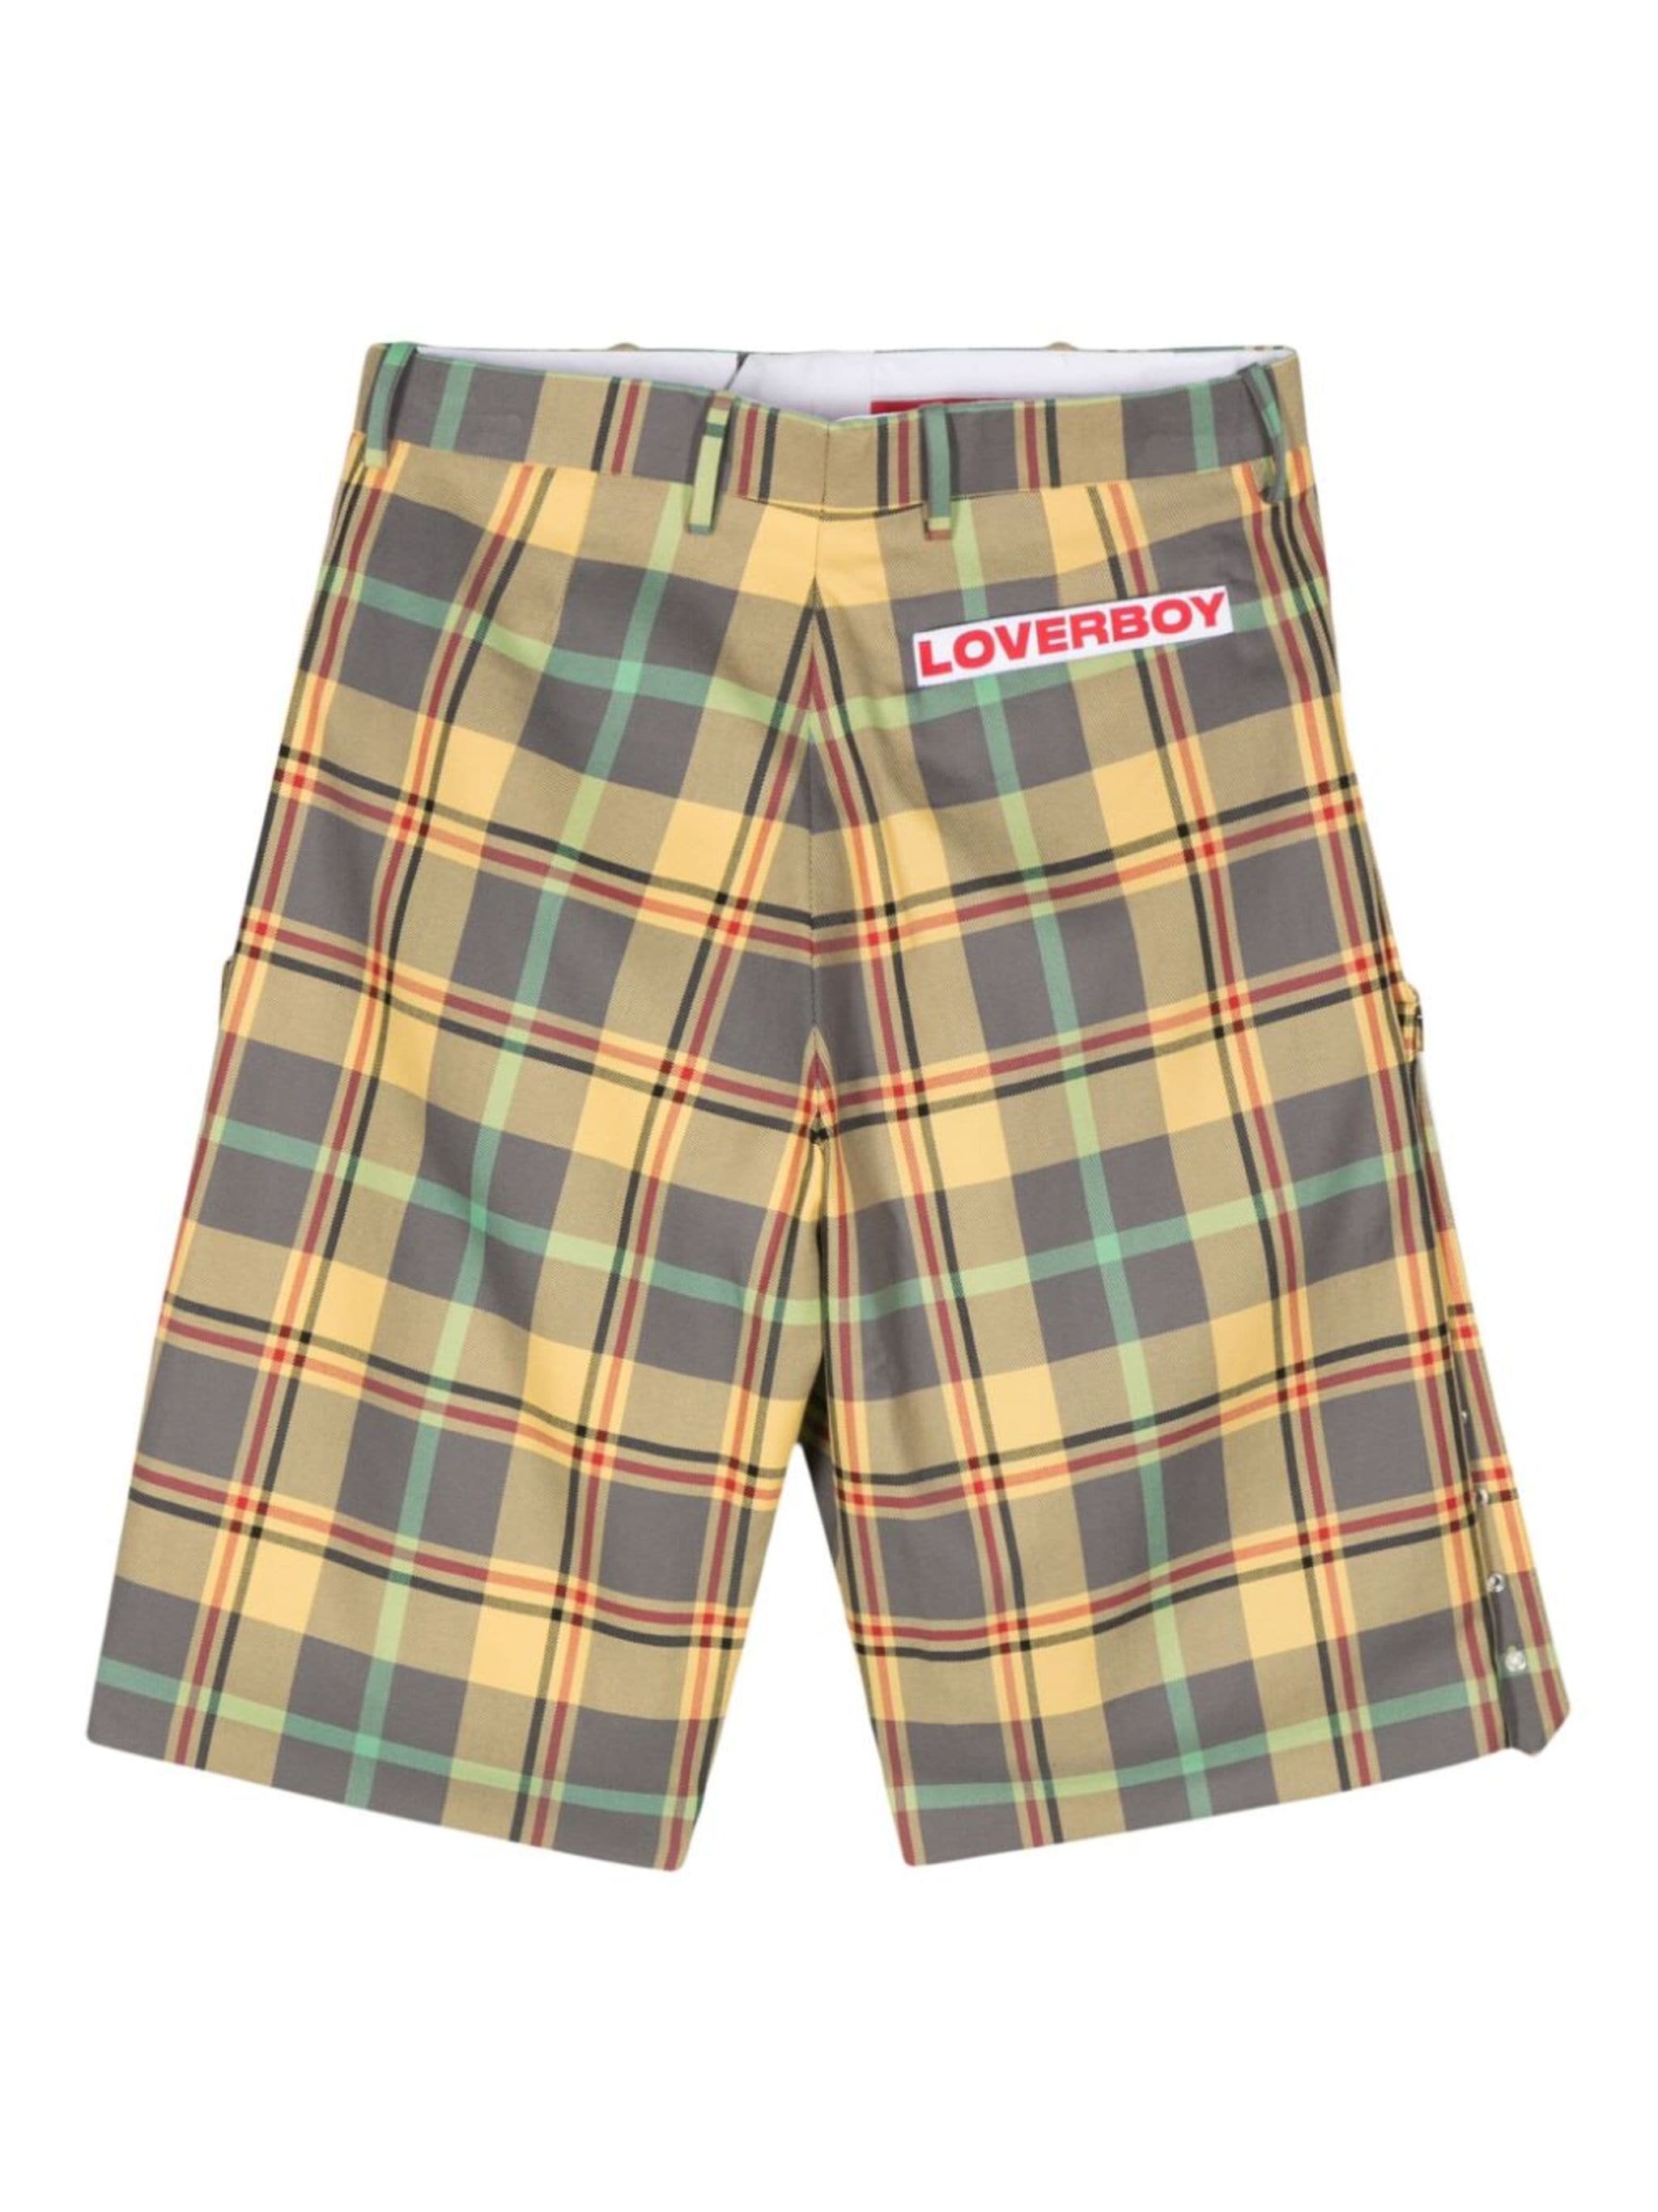 Glasgow cotton shorts - 2